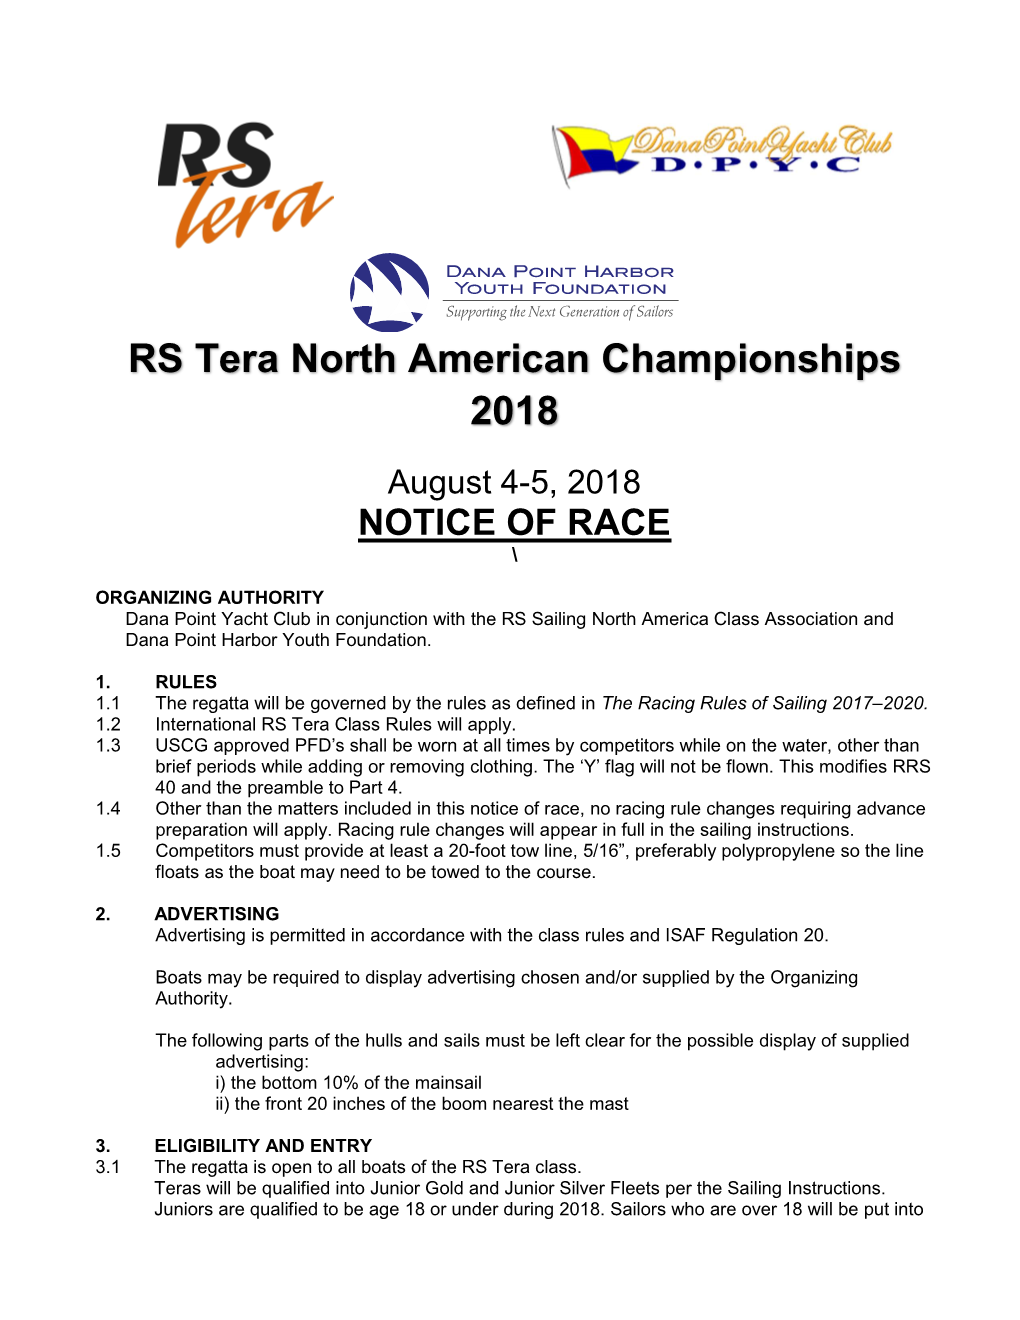 RS Tera North American Championships 2018